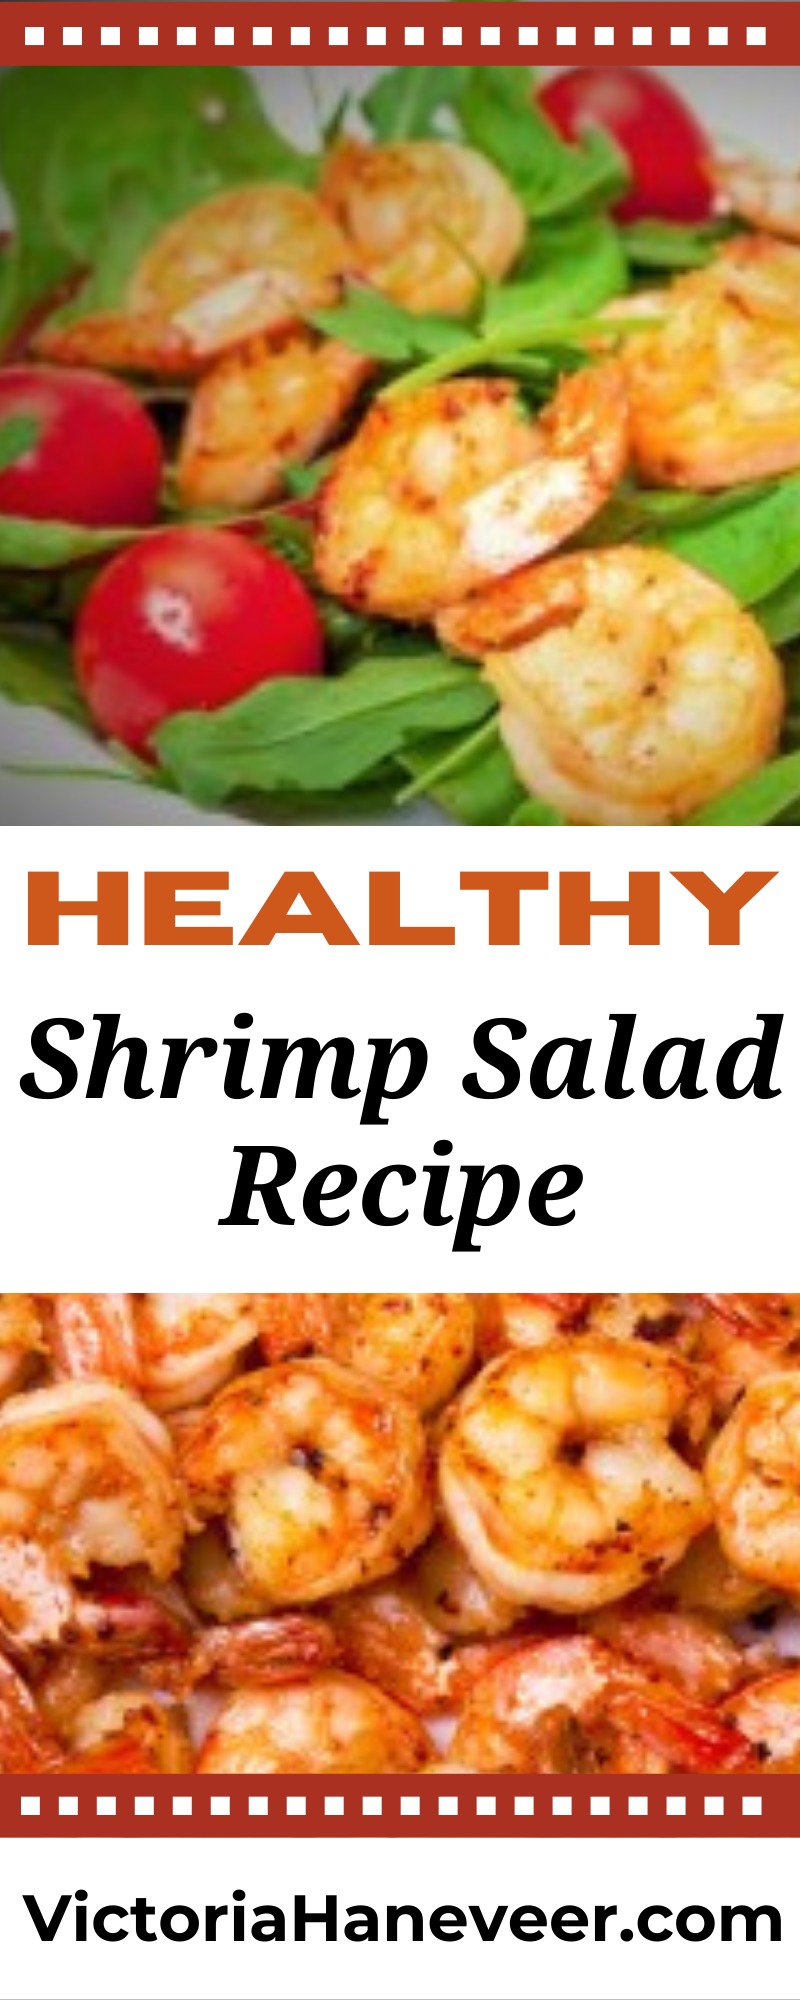 Easy Shrimp Salad Recipe with Cherry Tomatoes